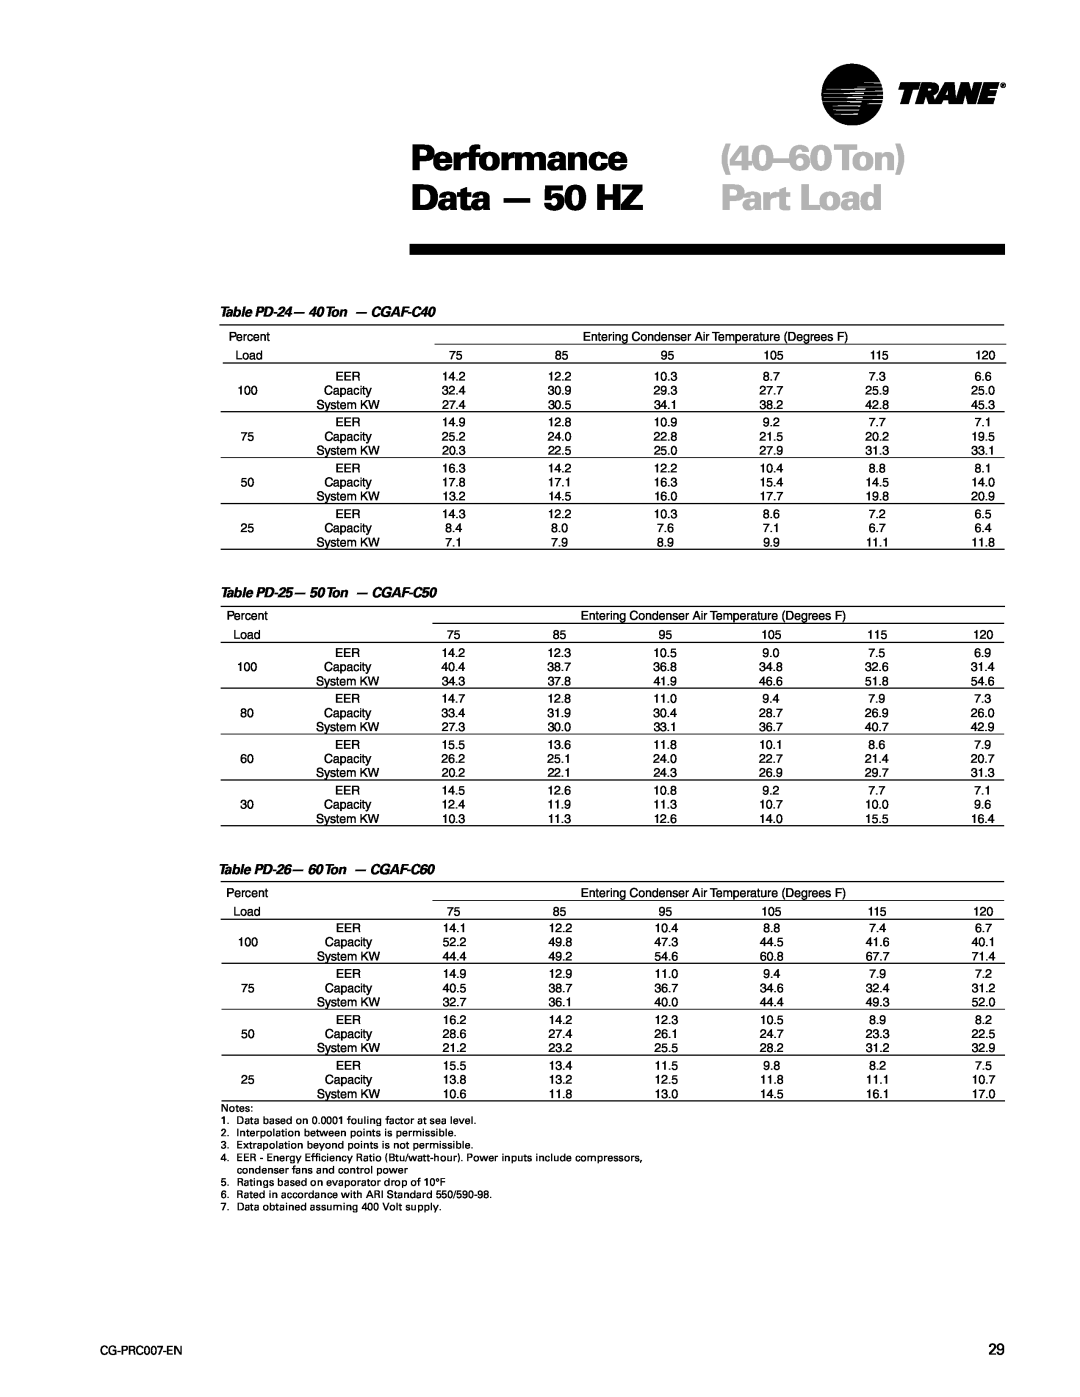 Trane CG-PRC007-EN manual Performance, 40-60Ton, Data - 50 HZ, Part Load, Table PD-24-40Ton - CGAF-C40 